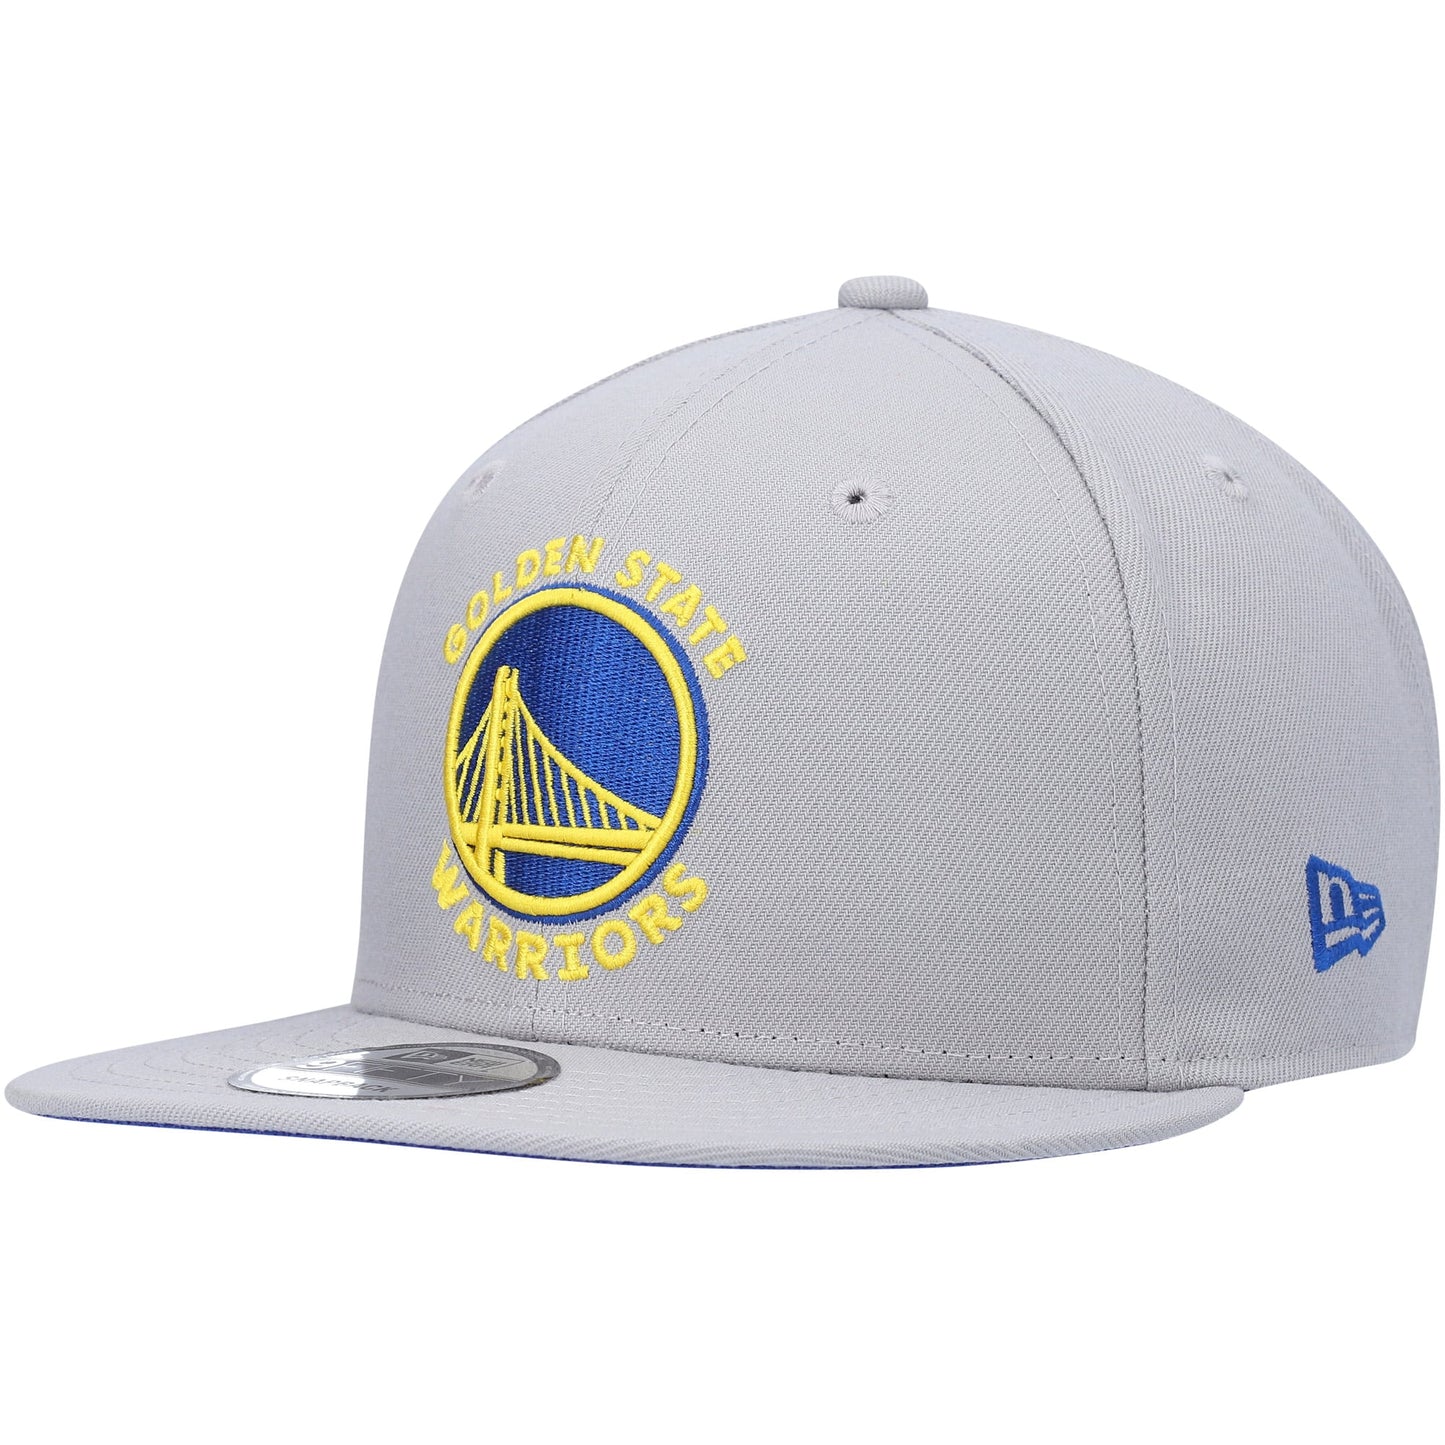 Golden State Warriors New Era 9FIFTY Snapback Hat - Gray